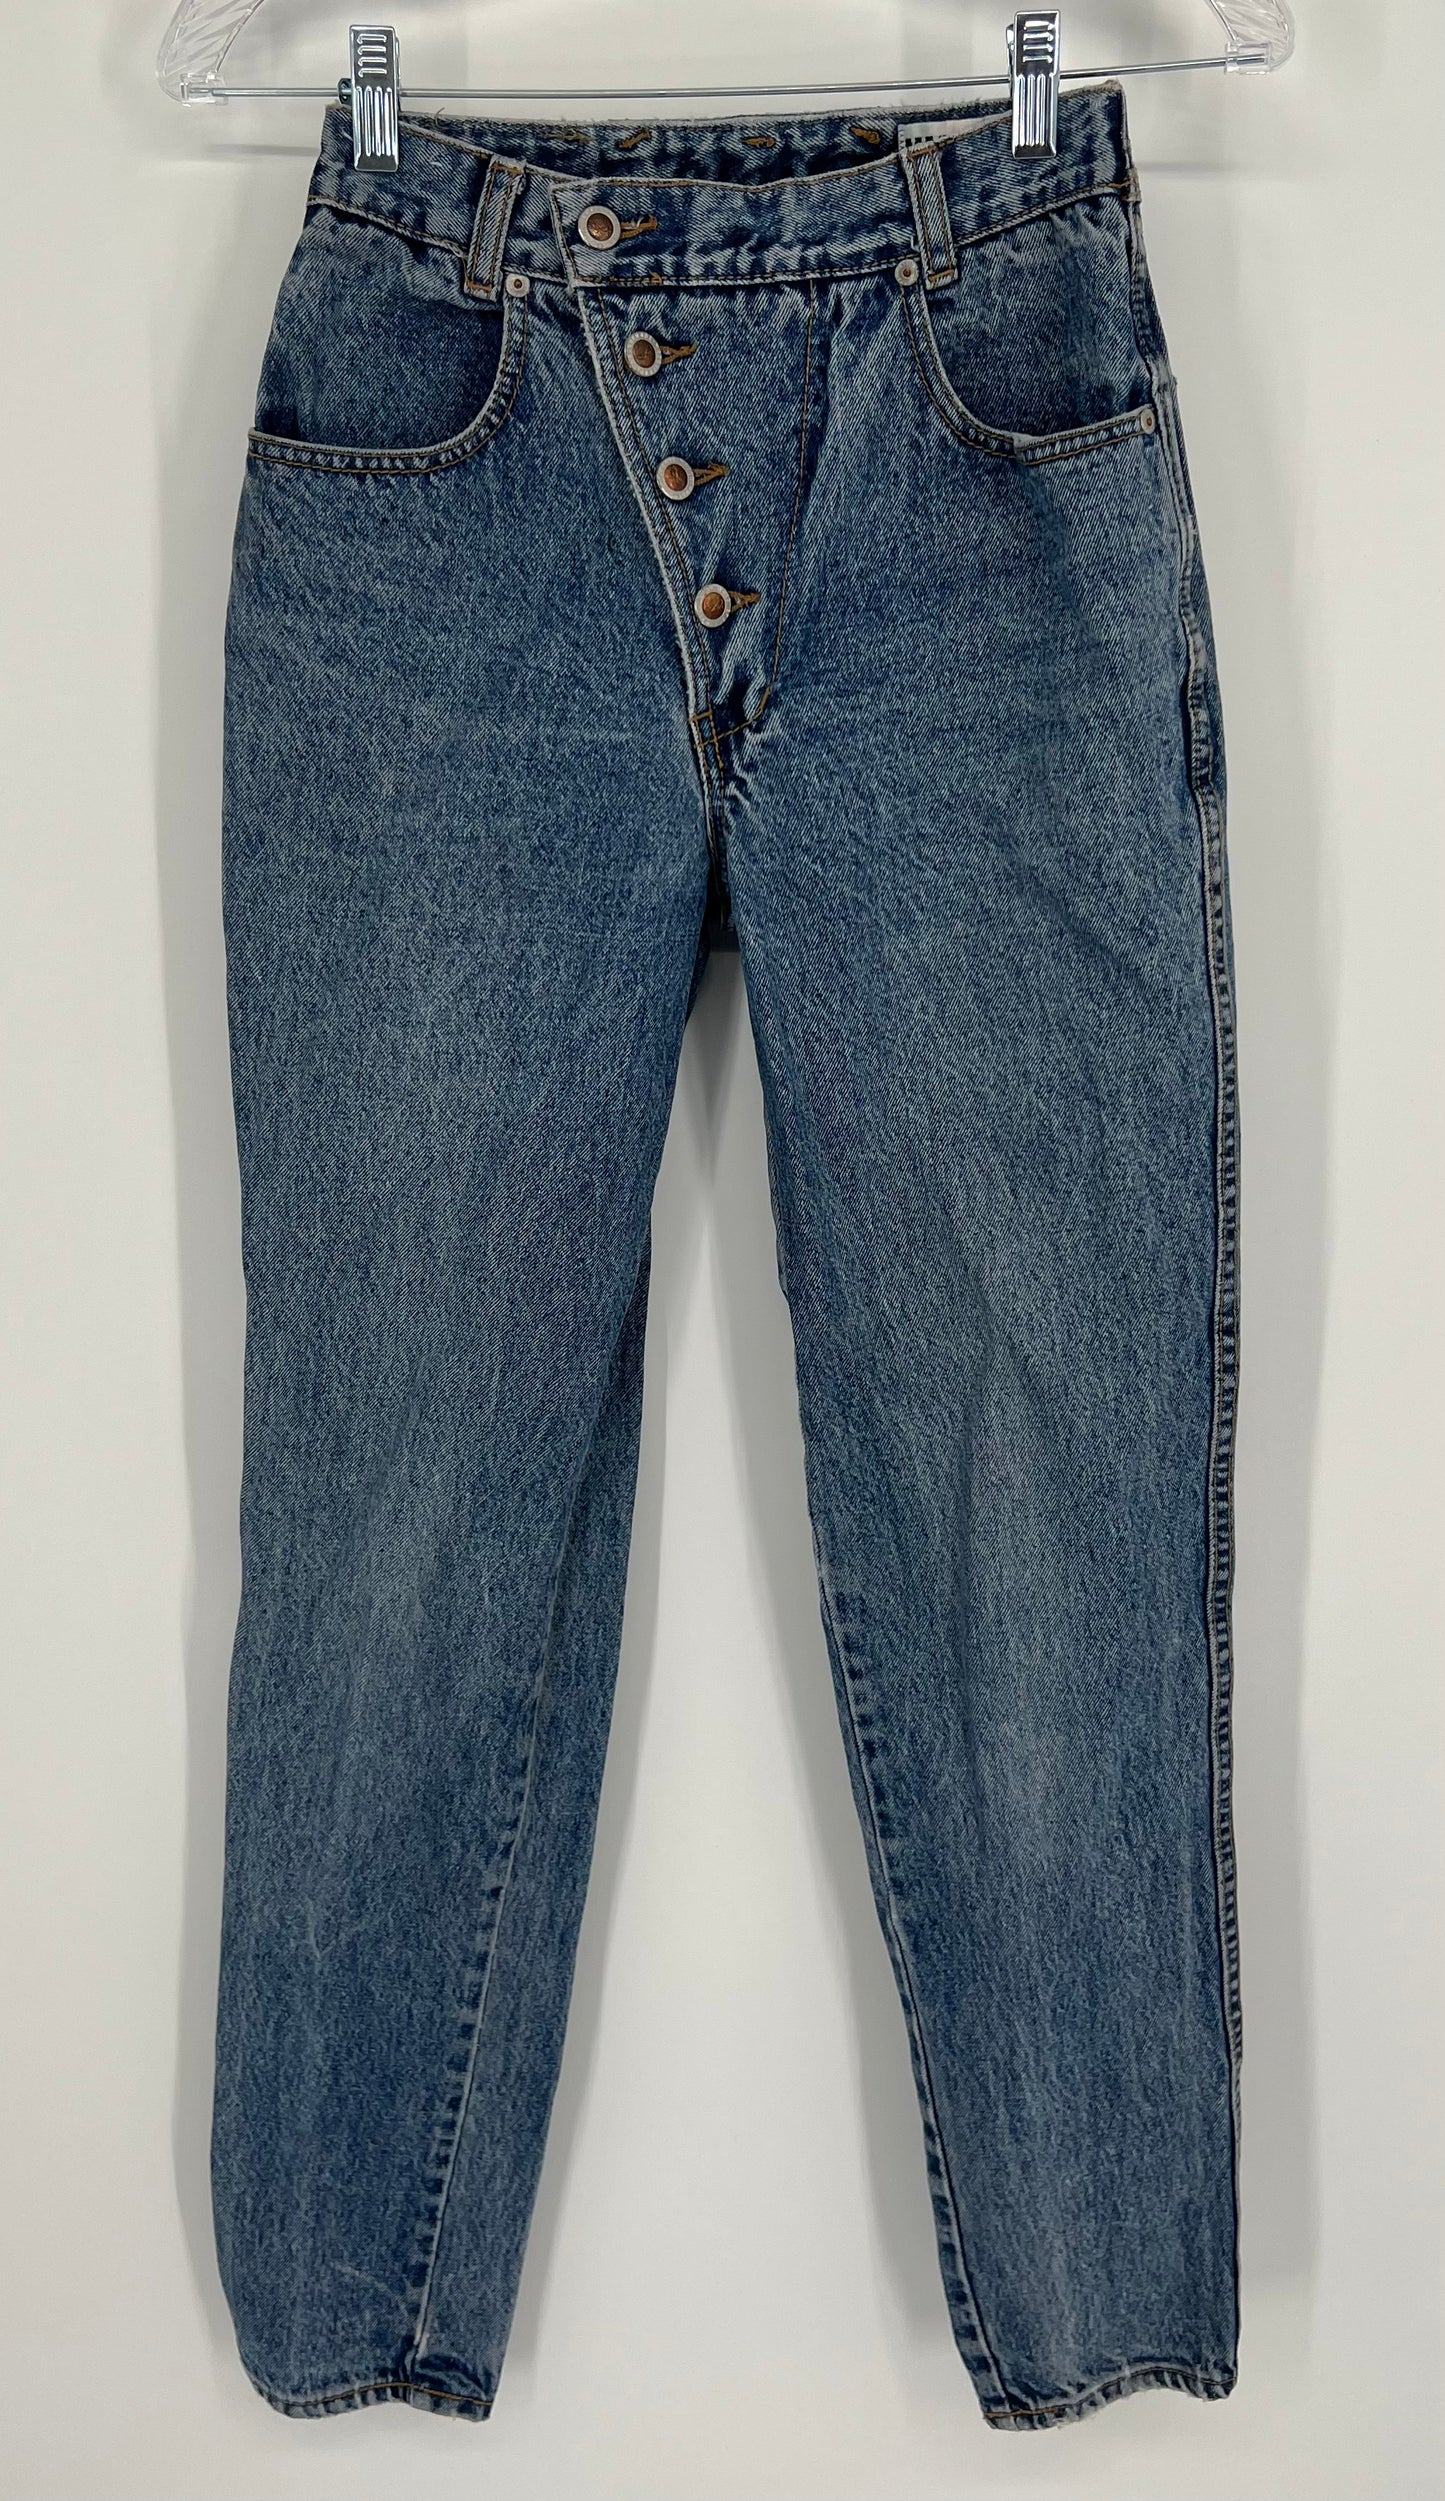 Vintage 80s Lawman Masquerade High Waisted Jeans Asymmetrical Button Closure Sz: 5/6